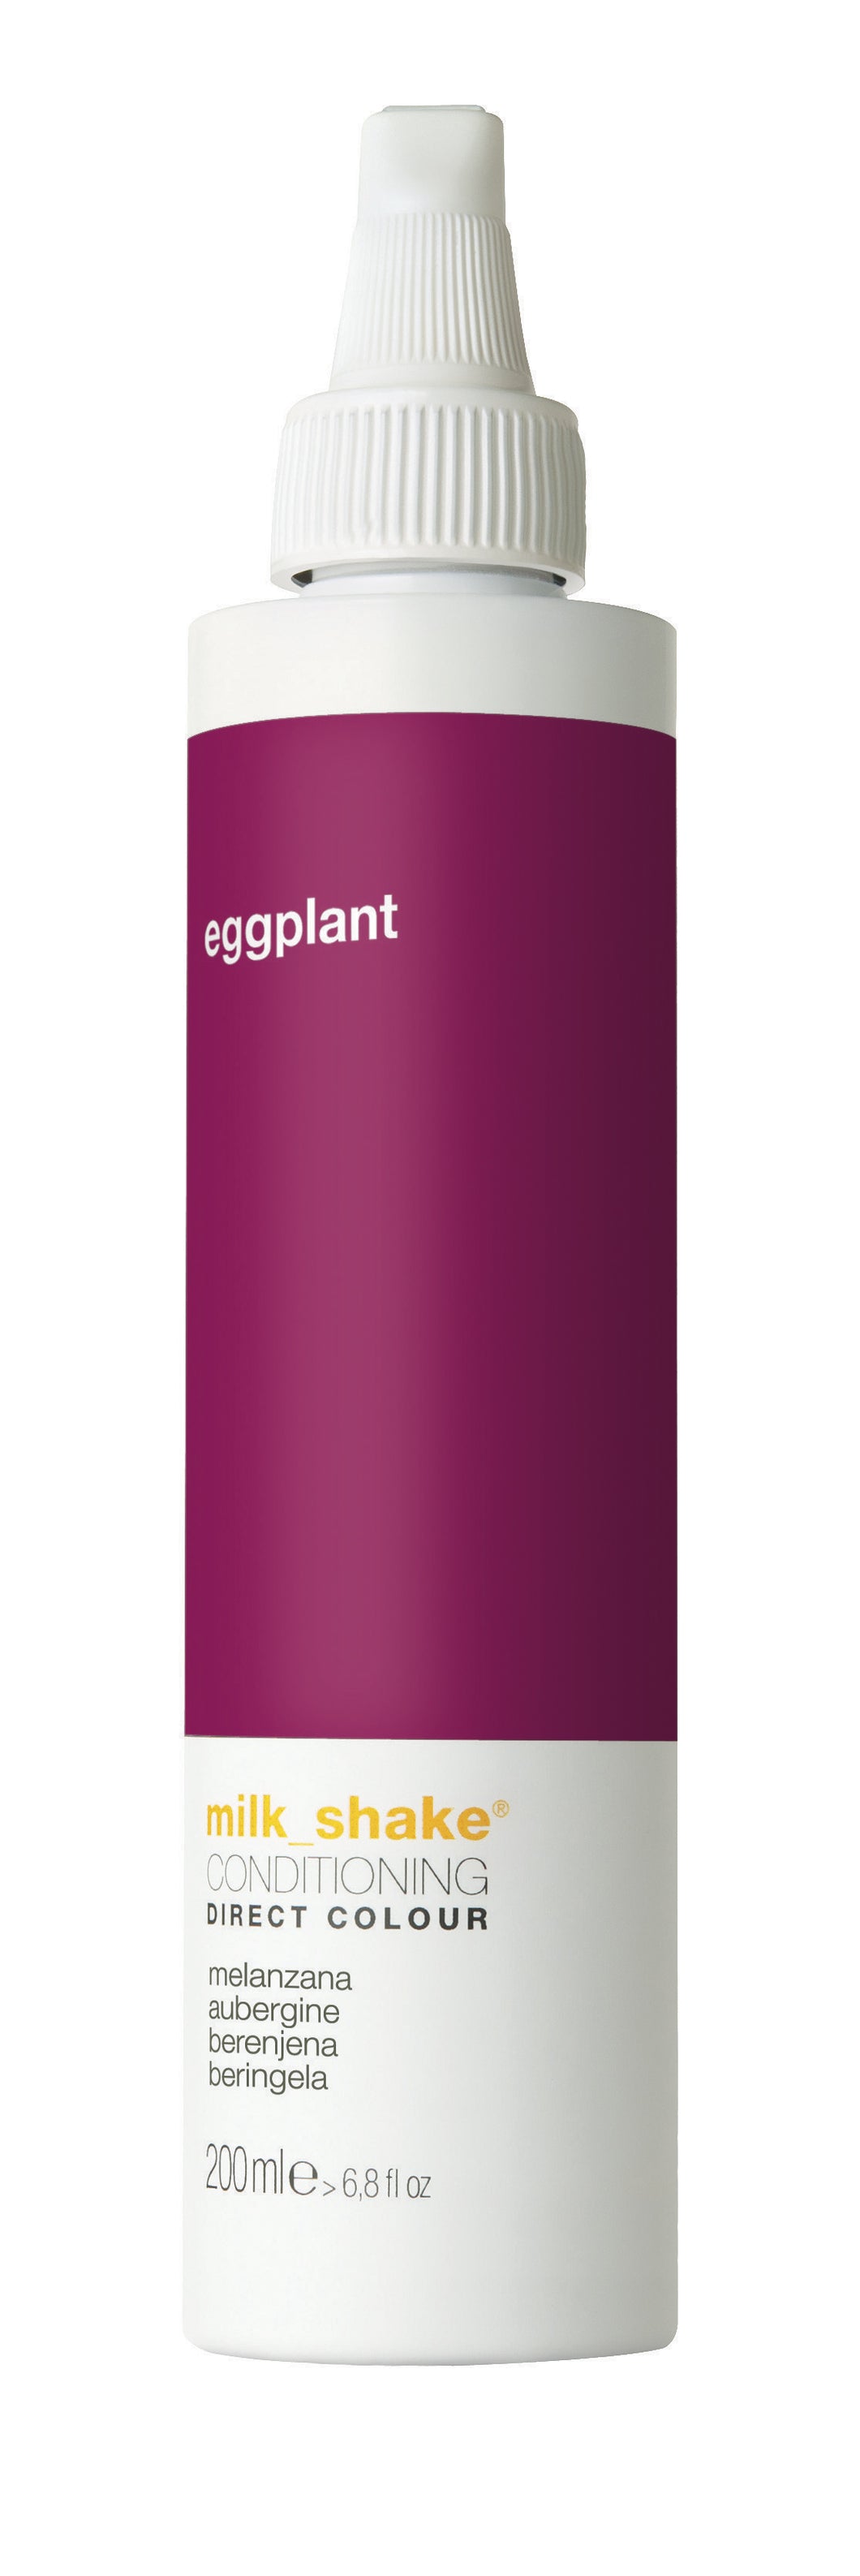 milk_shake direct colour eggplant-0